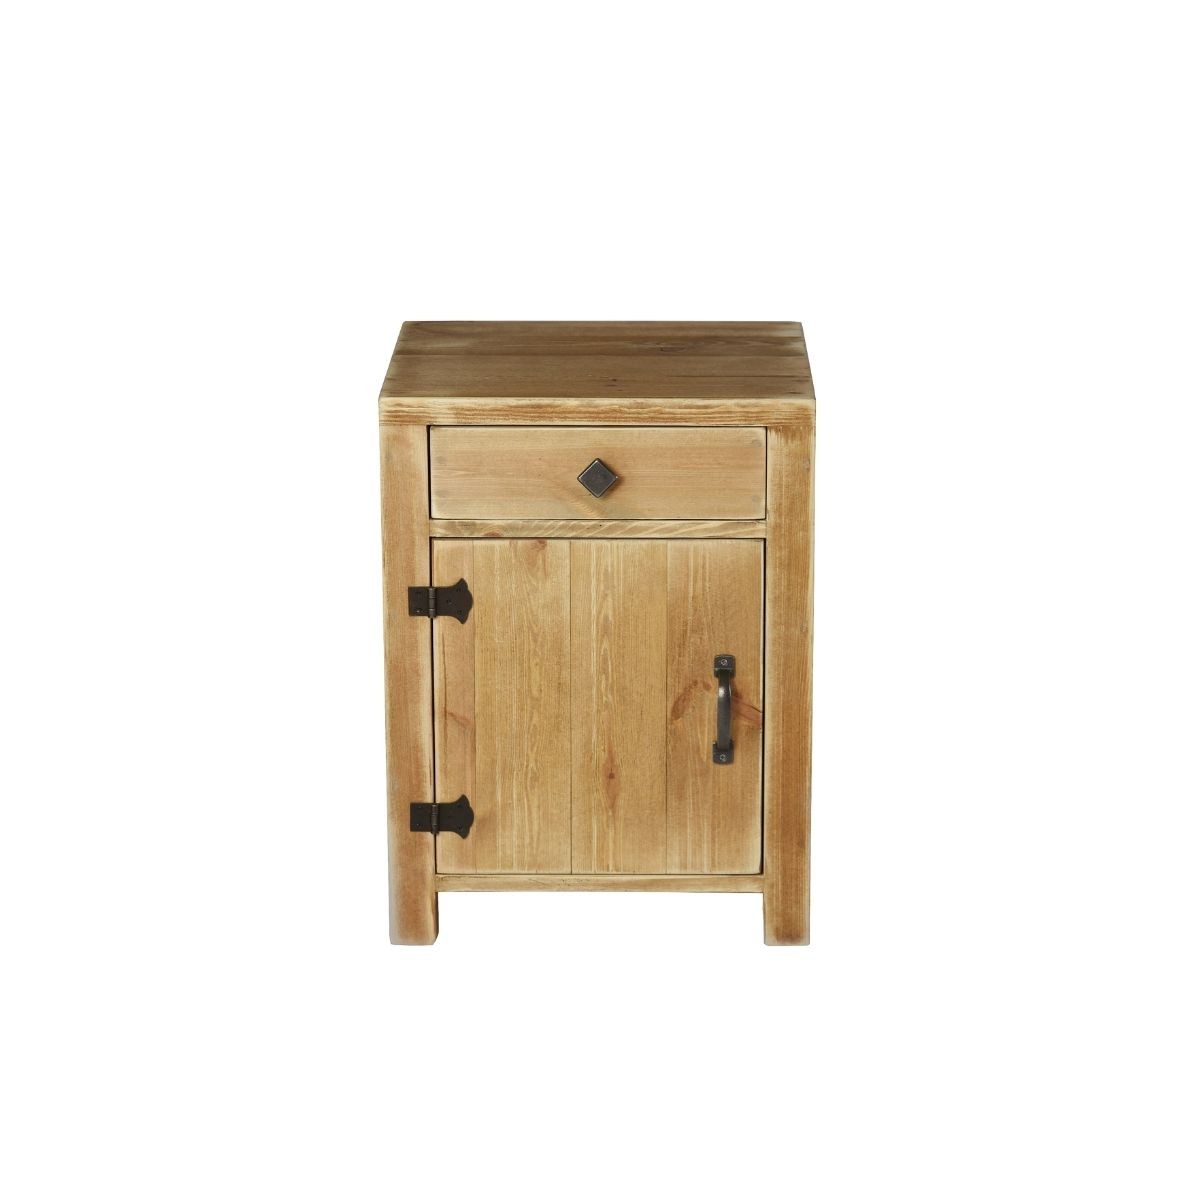 Table de chevet COLETTE 1 tiroir 1 porte en bois massif